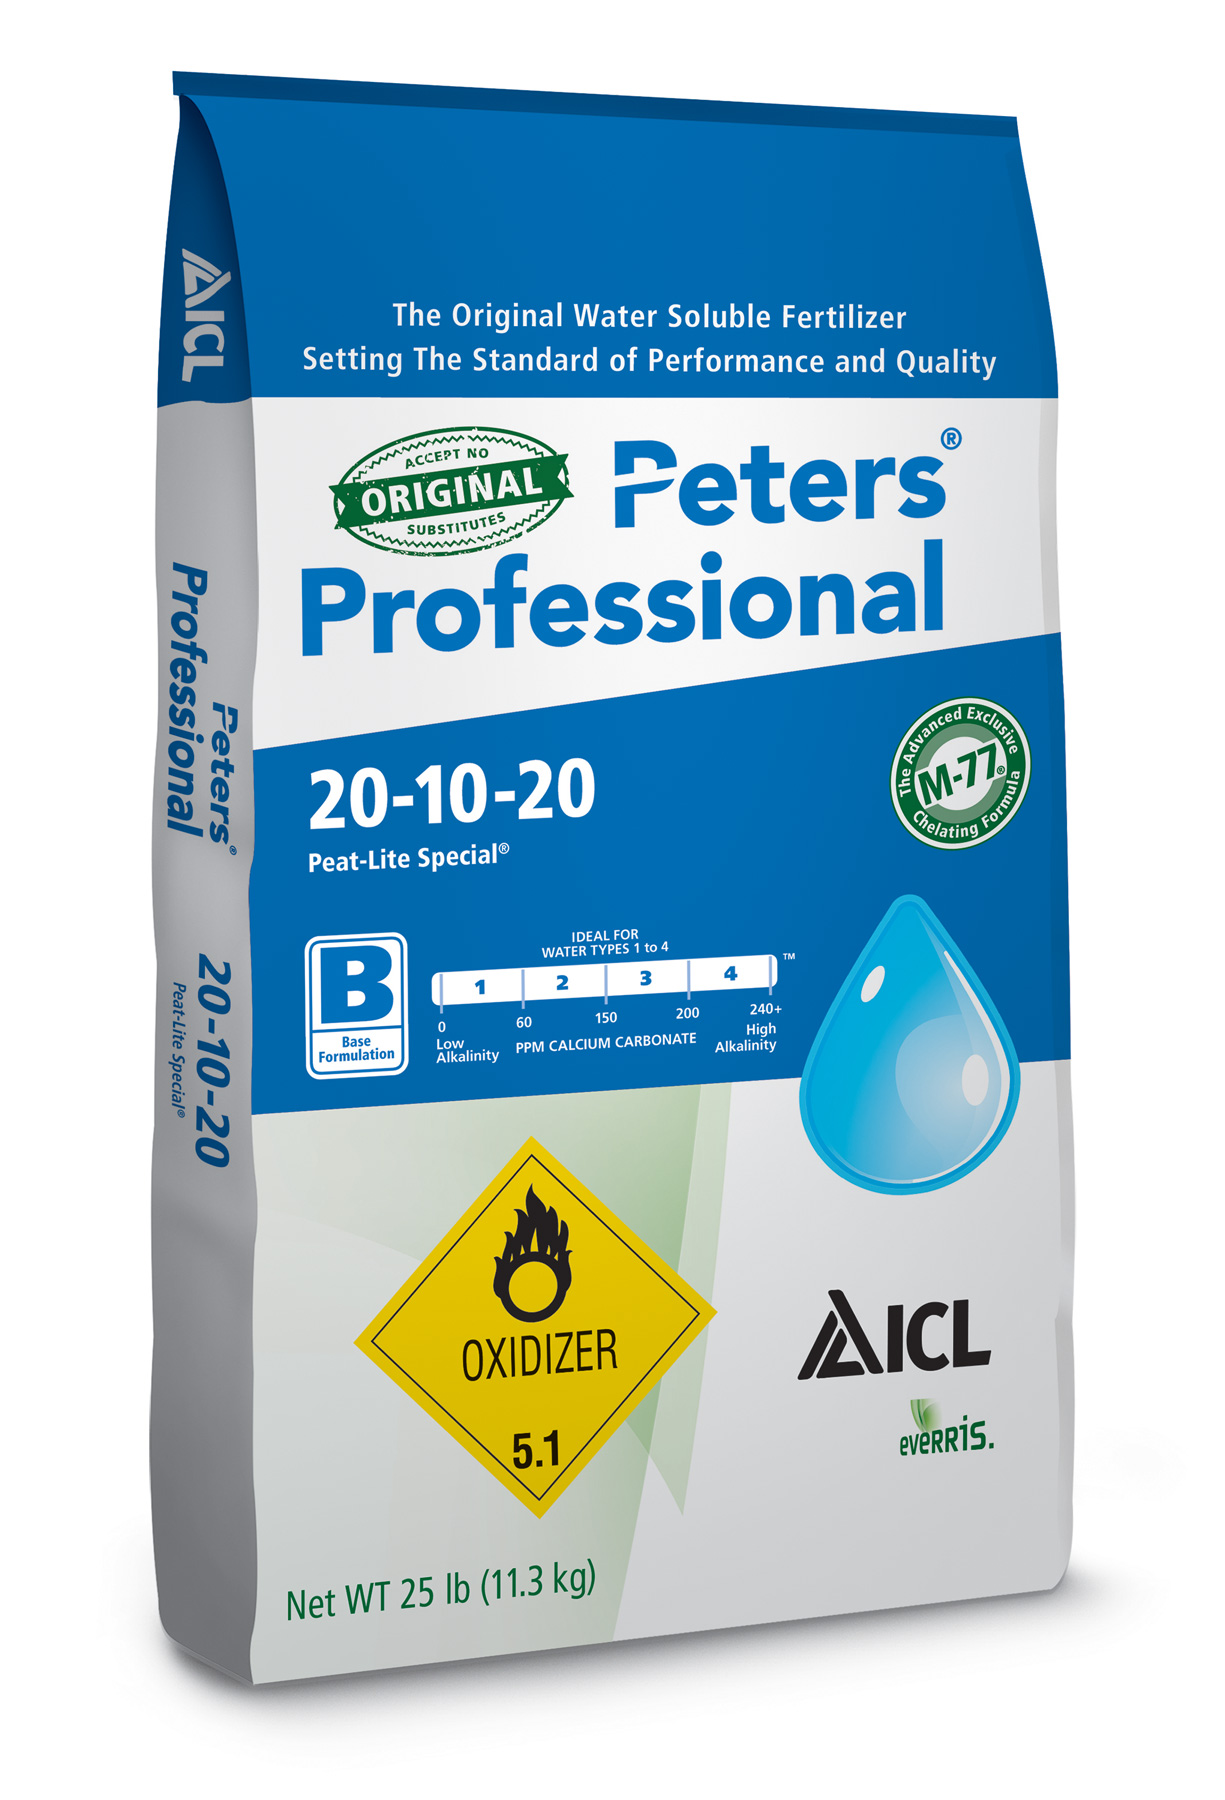 Peters Professional 20-10-20 Peat-Lite Special 25 lb Bag - Water Soluble Fertilizer